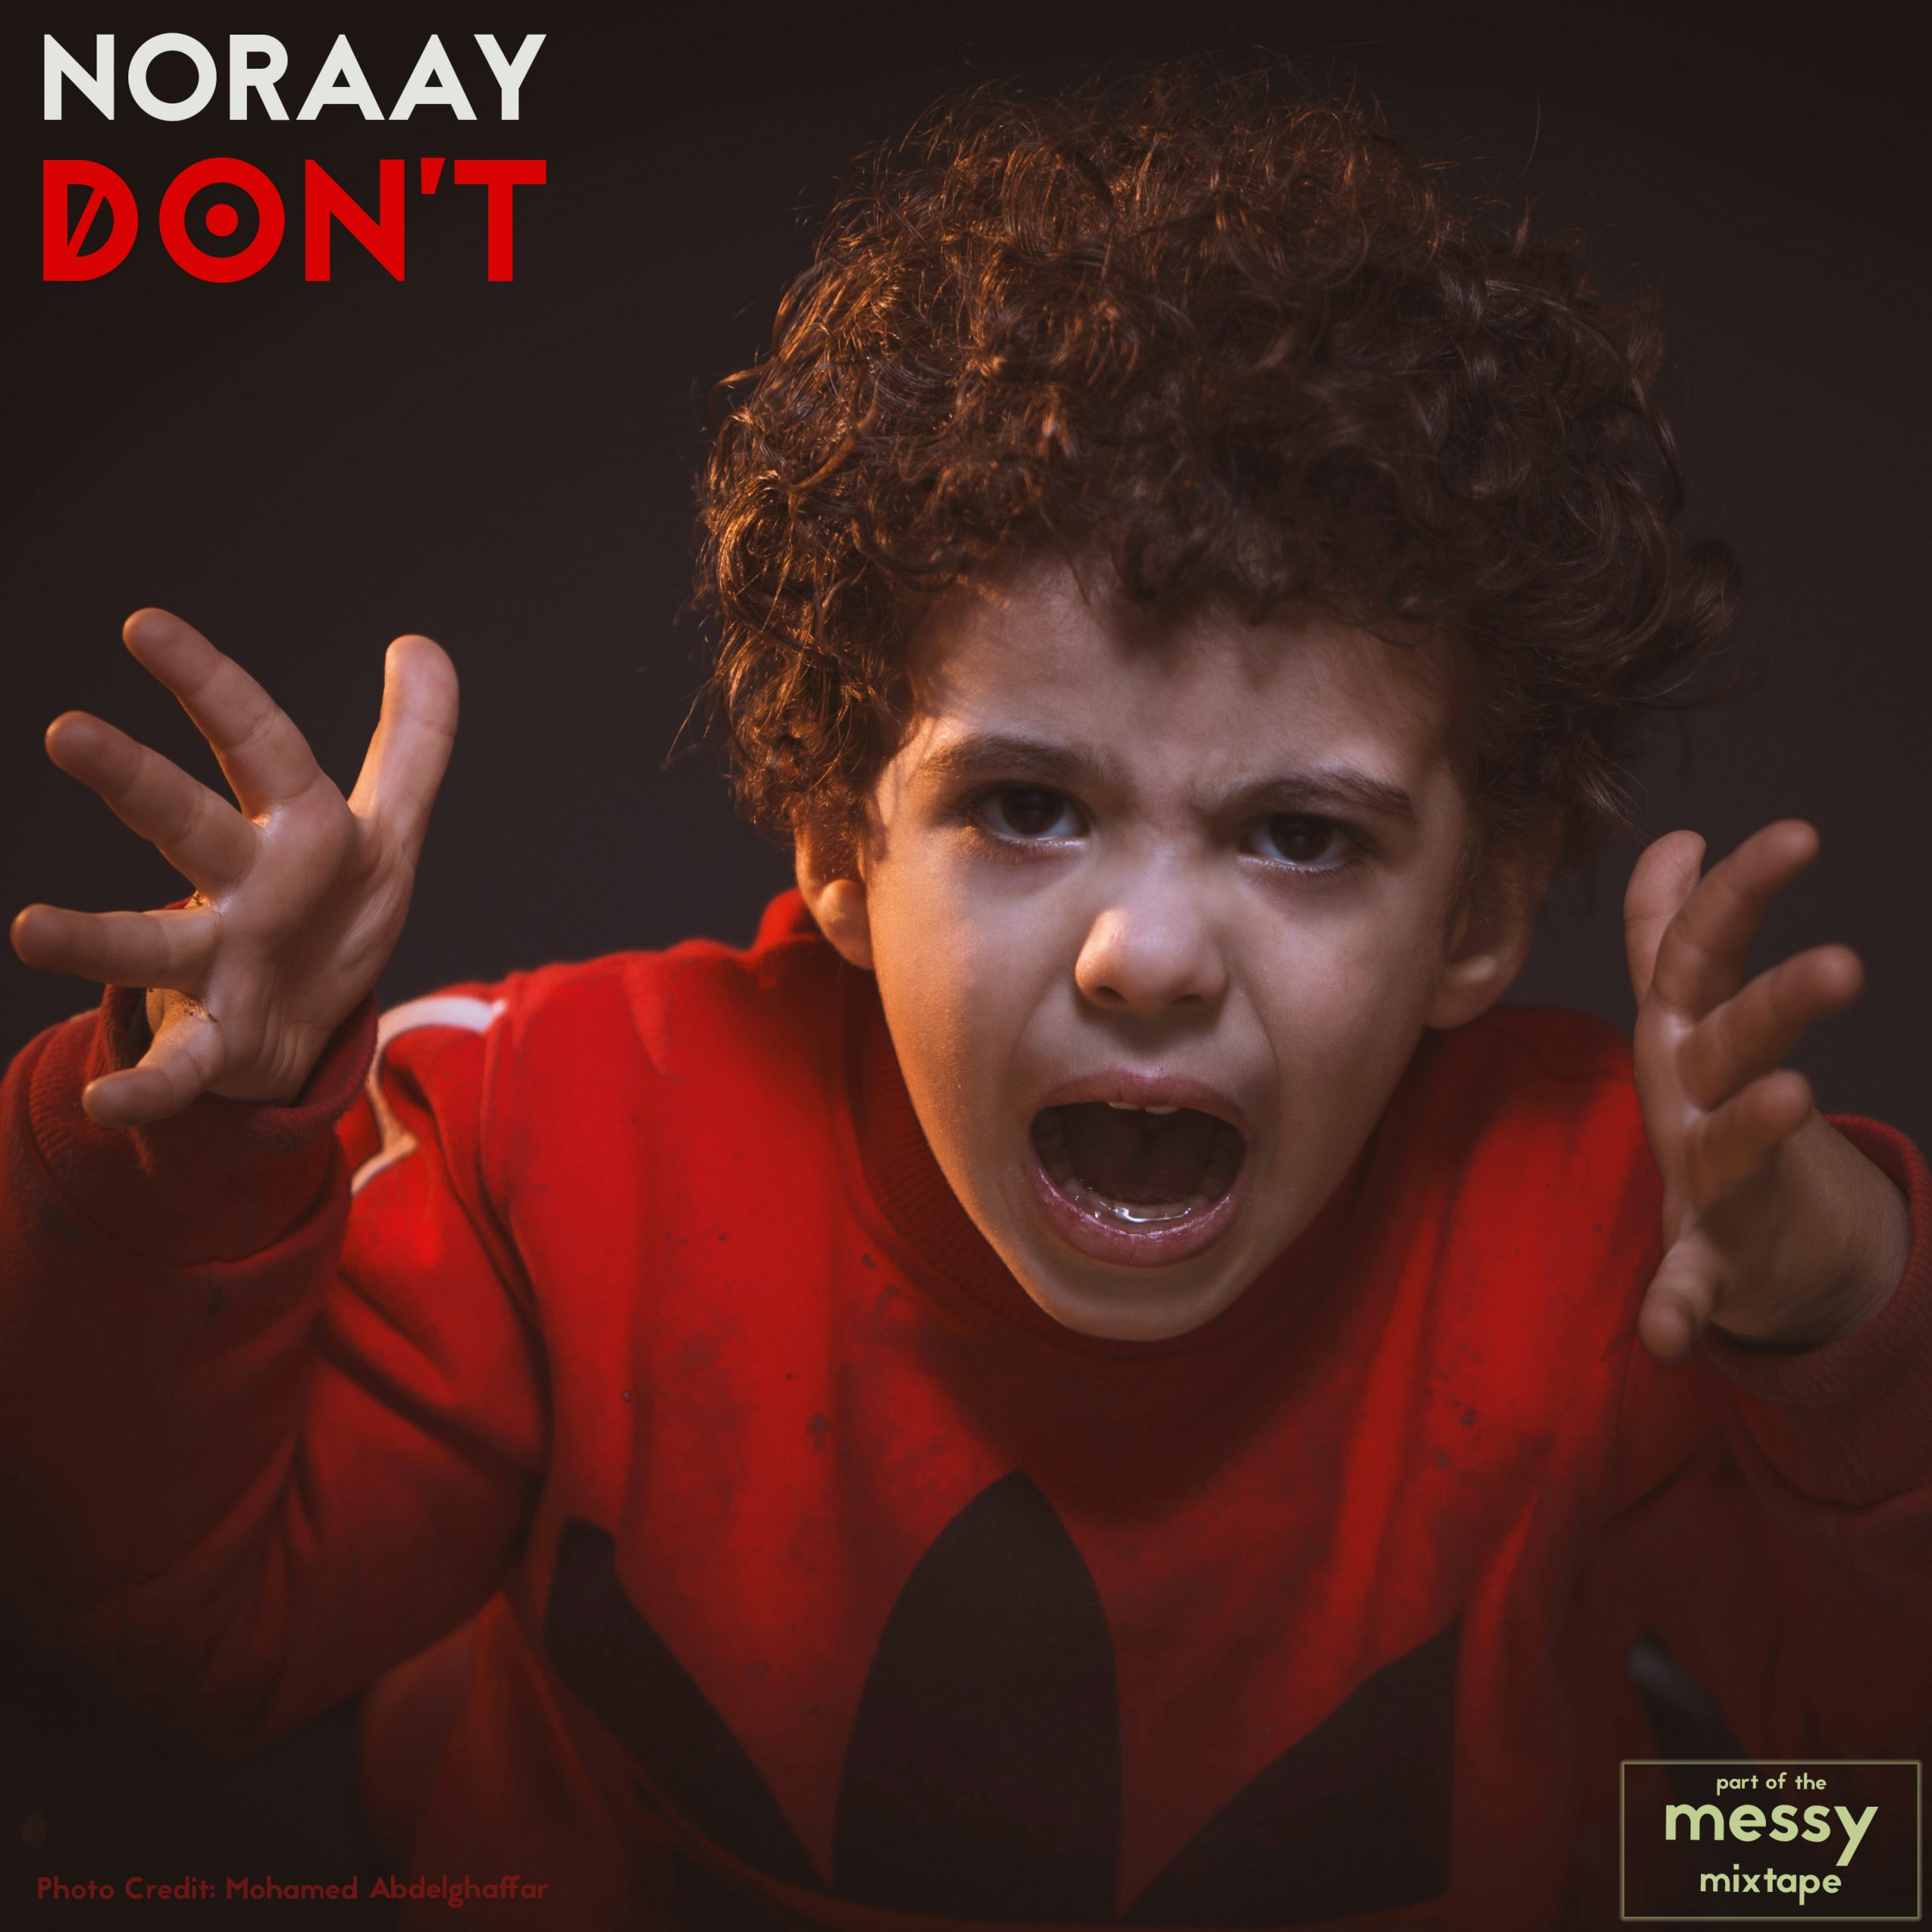 Noraay - Don't (single artwork)